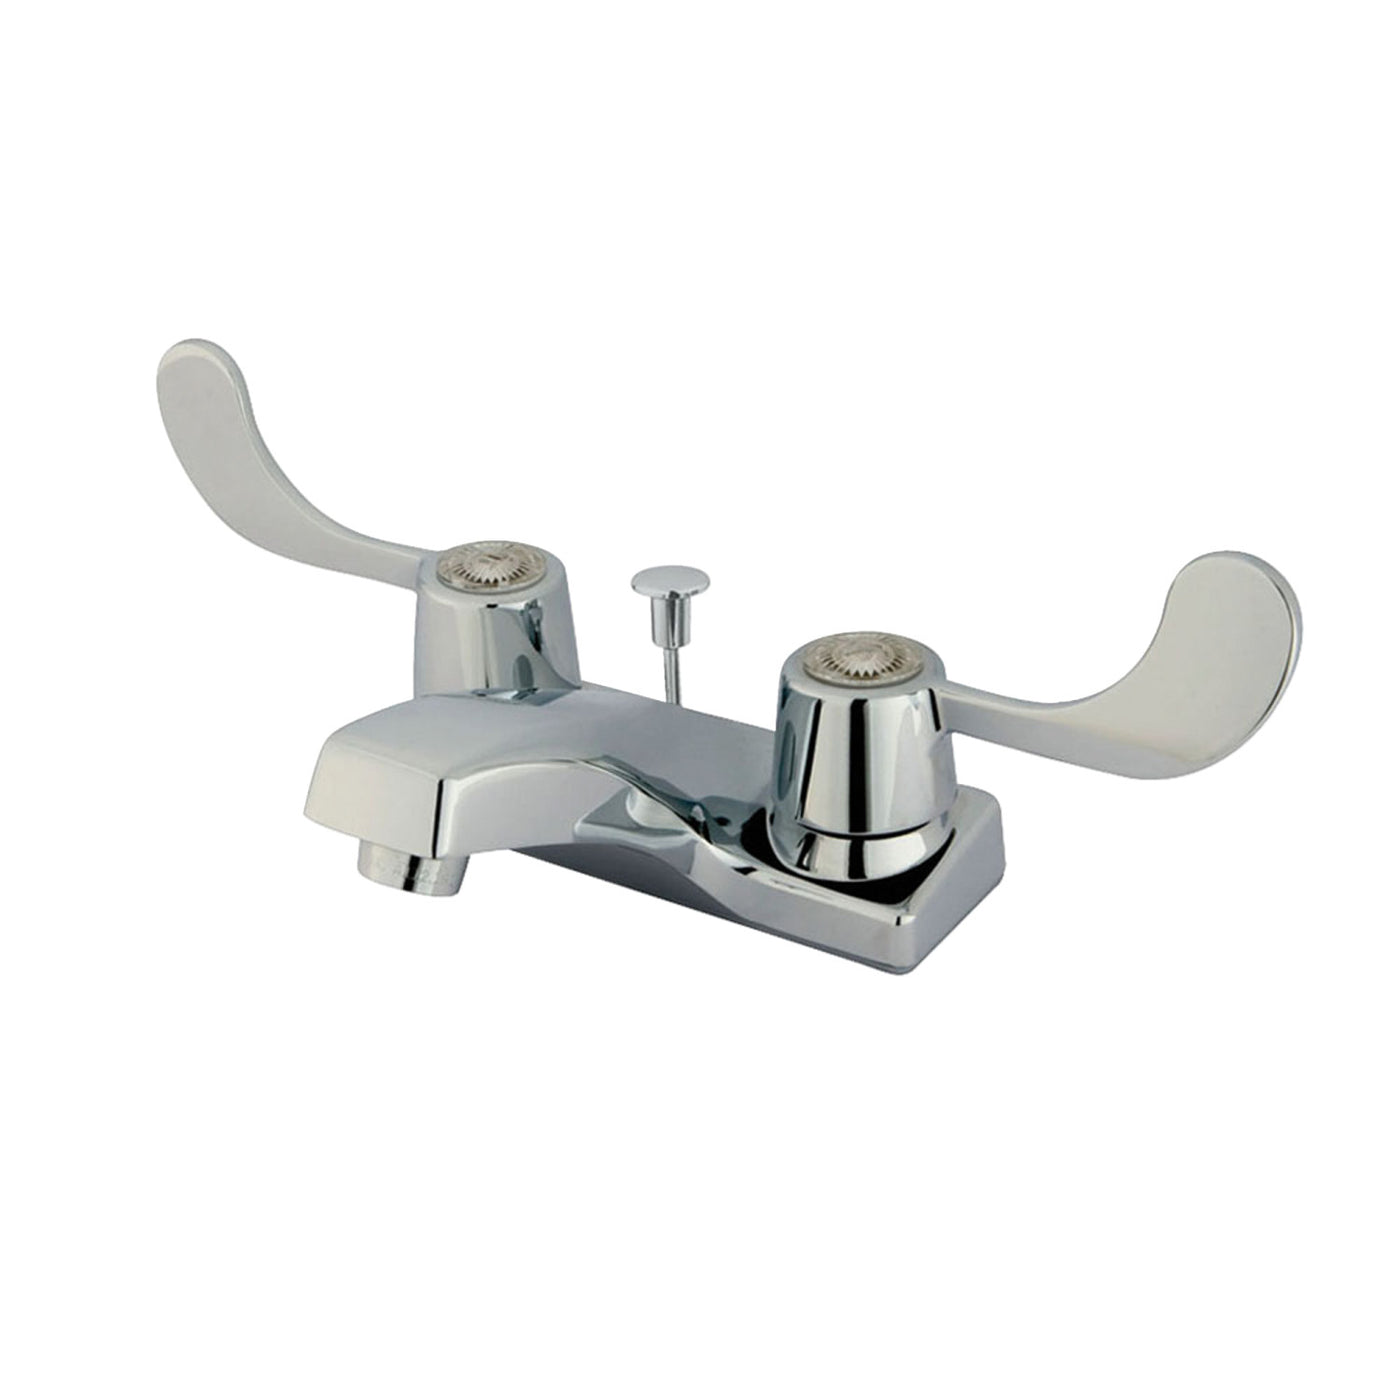 Elements of Design EB191 4-Inch Centerset Bathroom Faucet, Polished Chrome